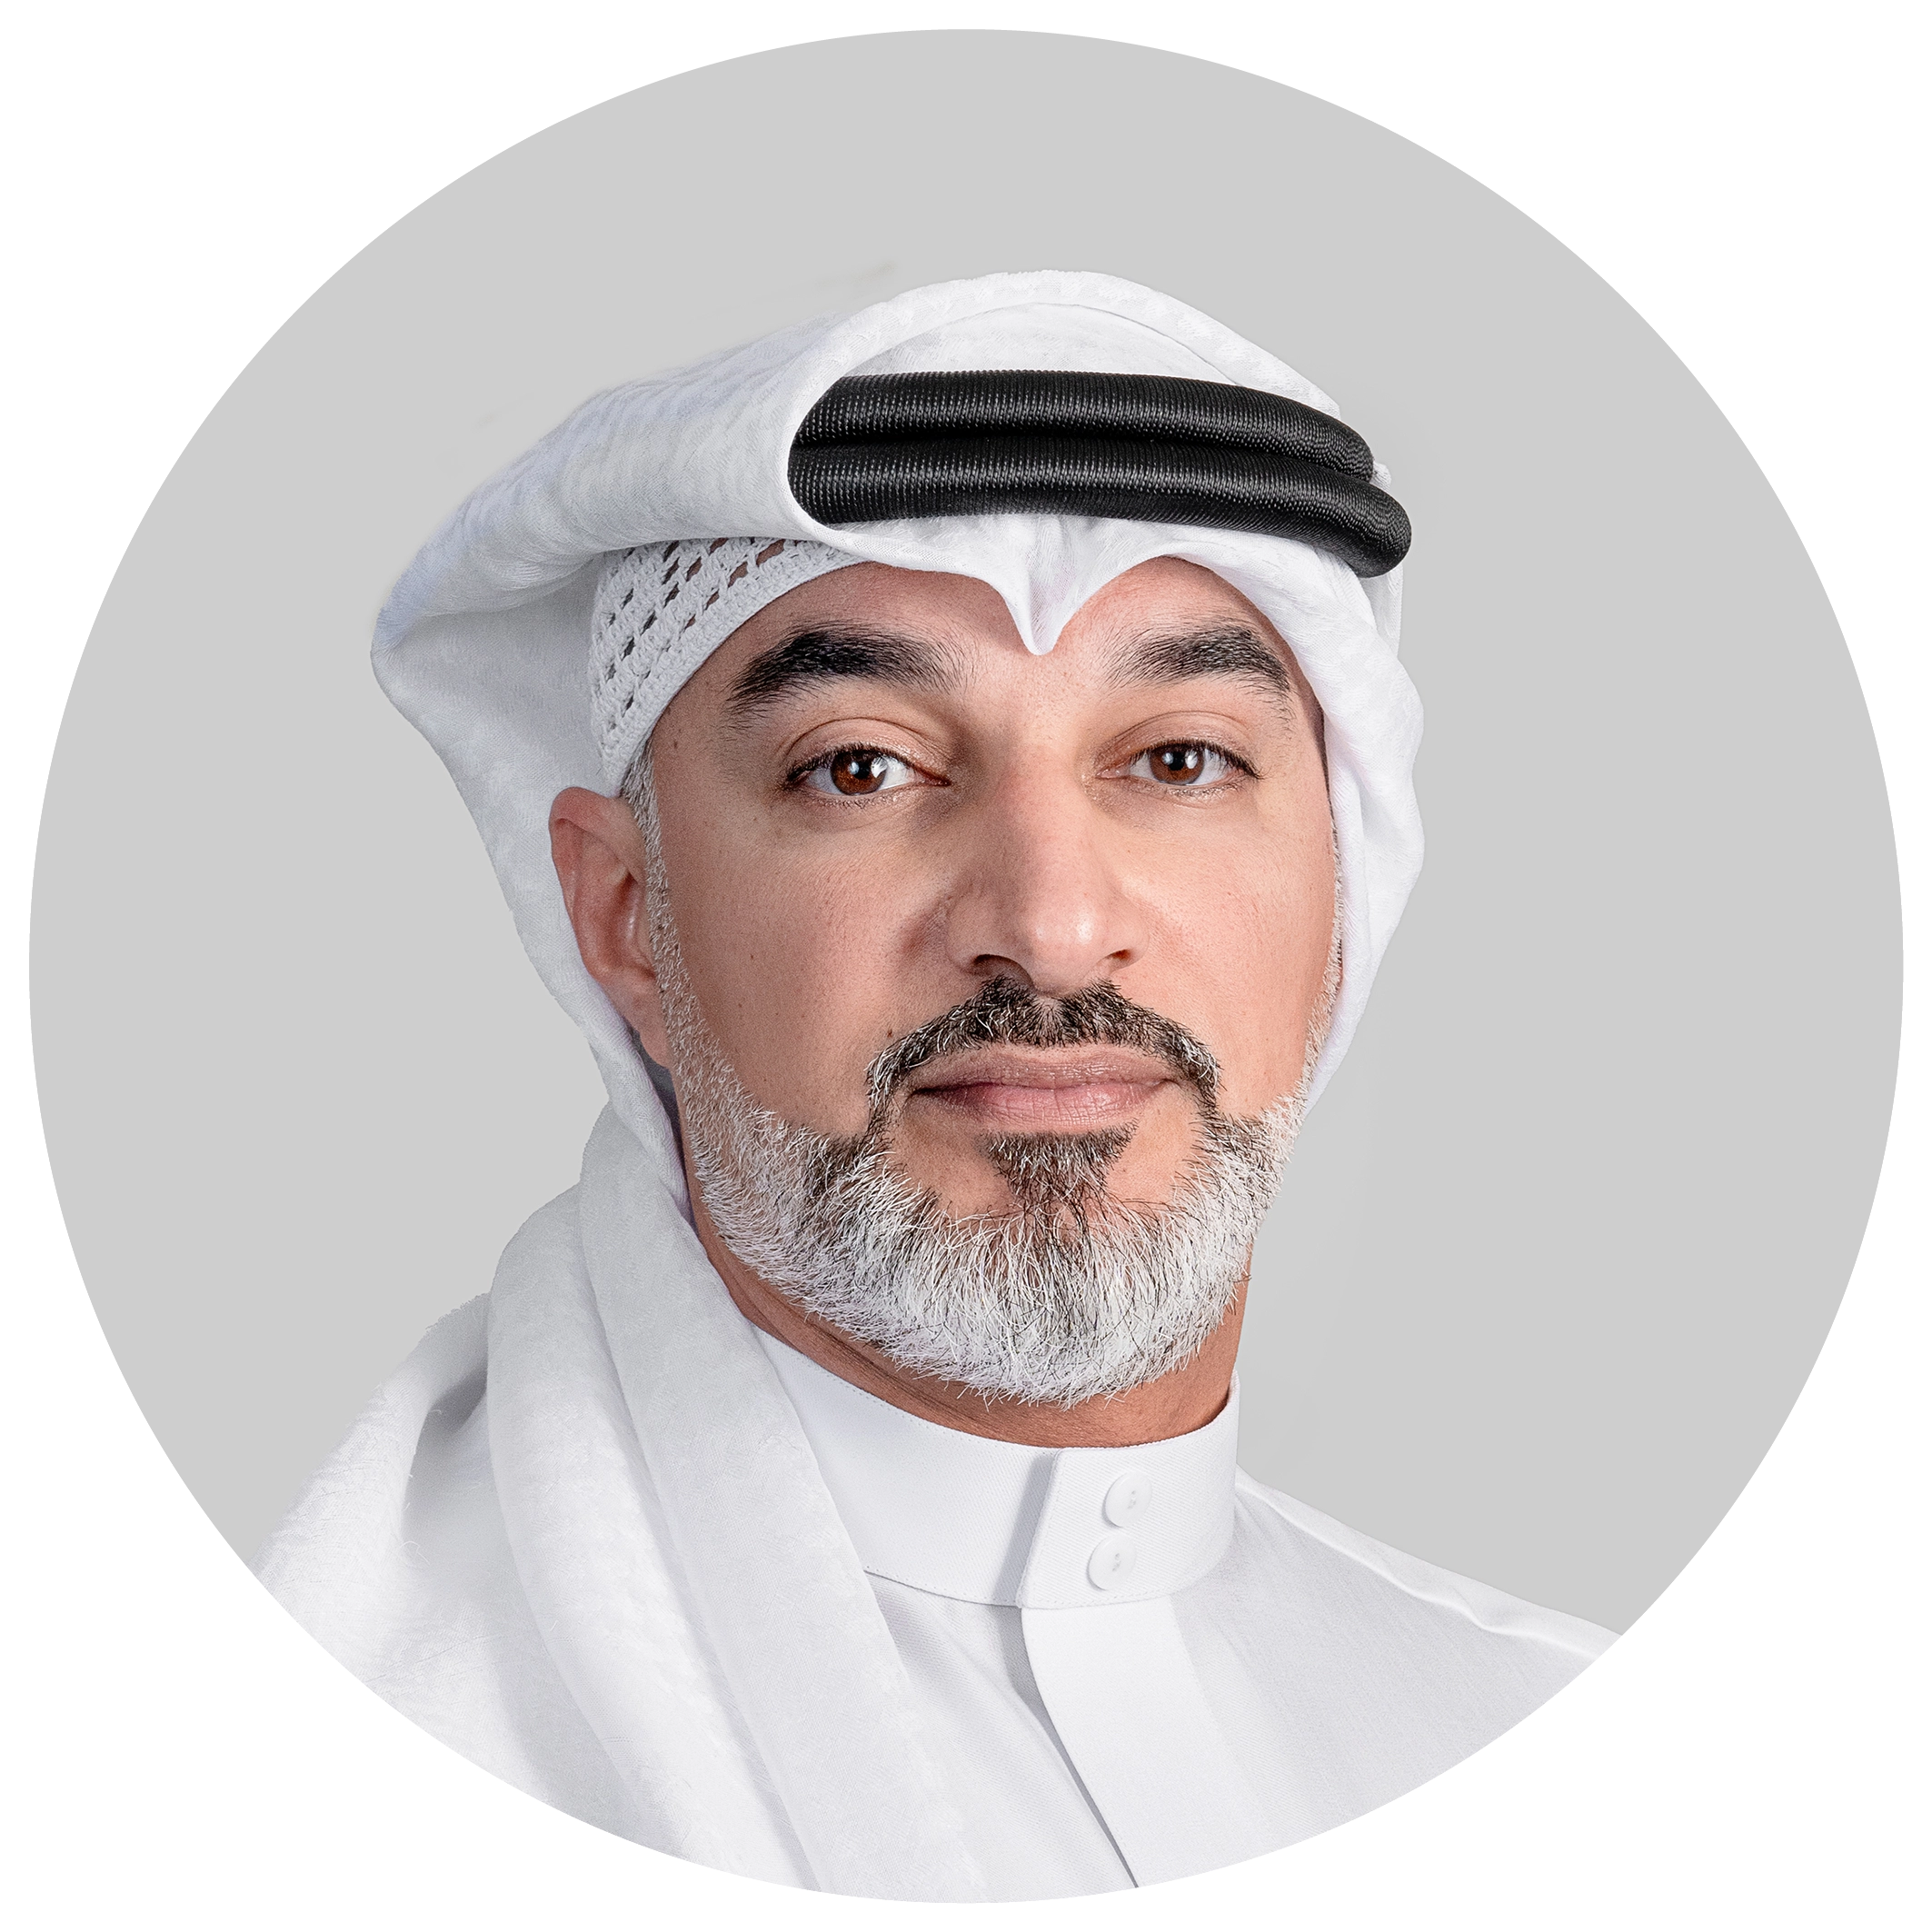 Mr. Ahmed Abdulwahed Abdulrahman